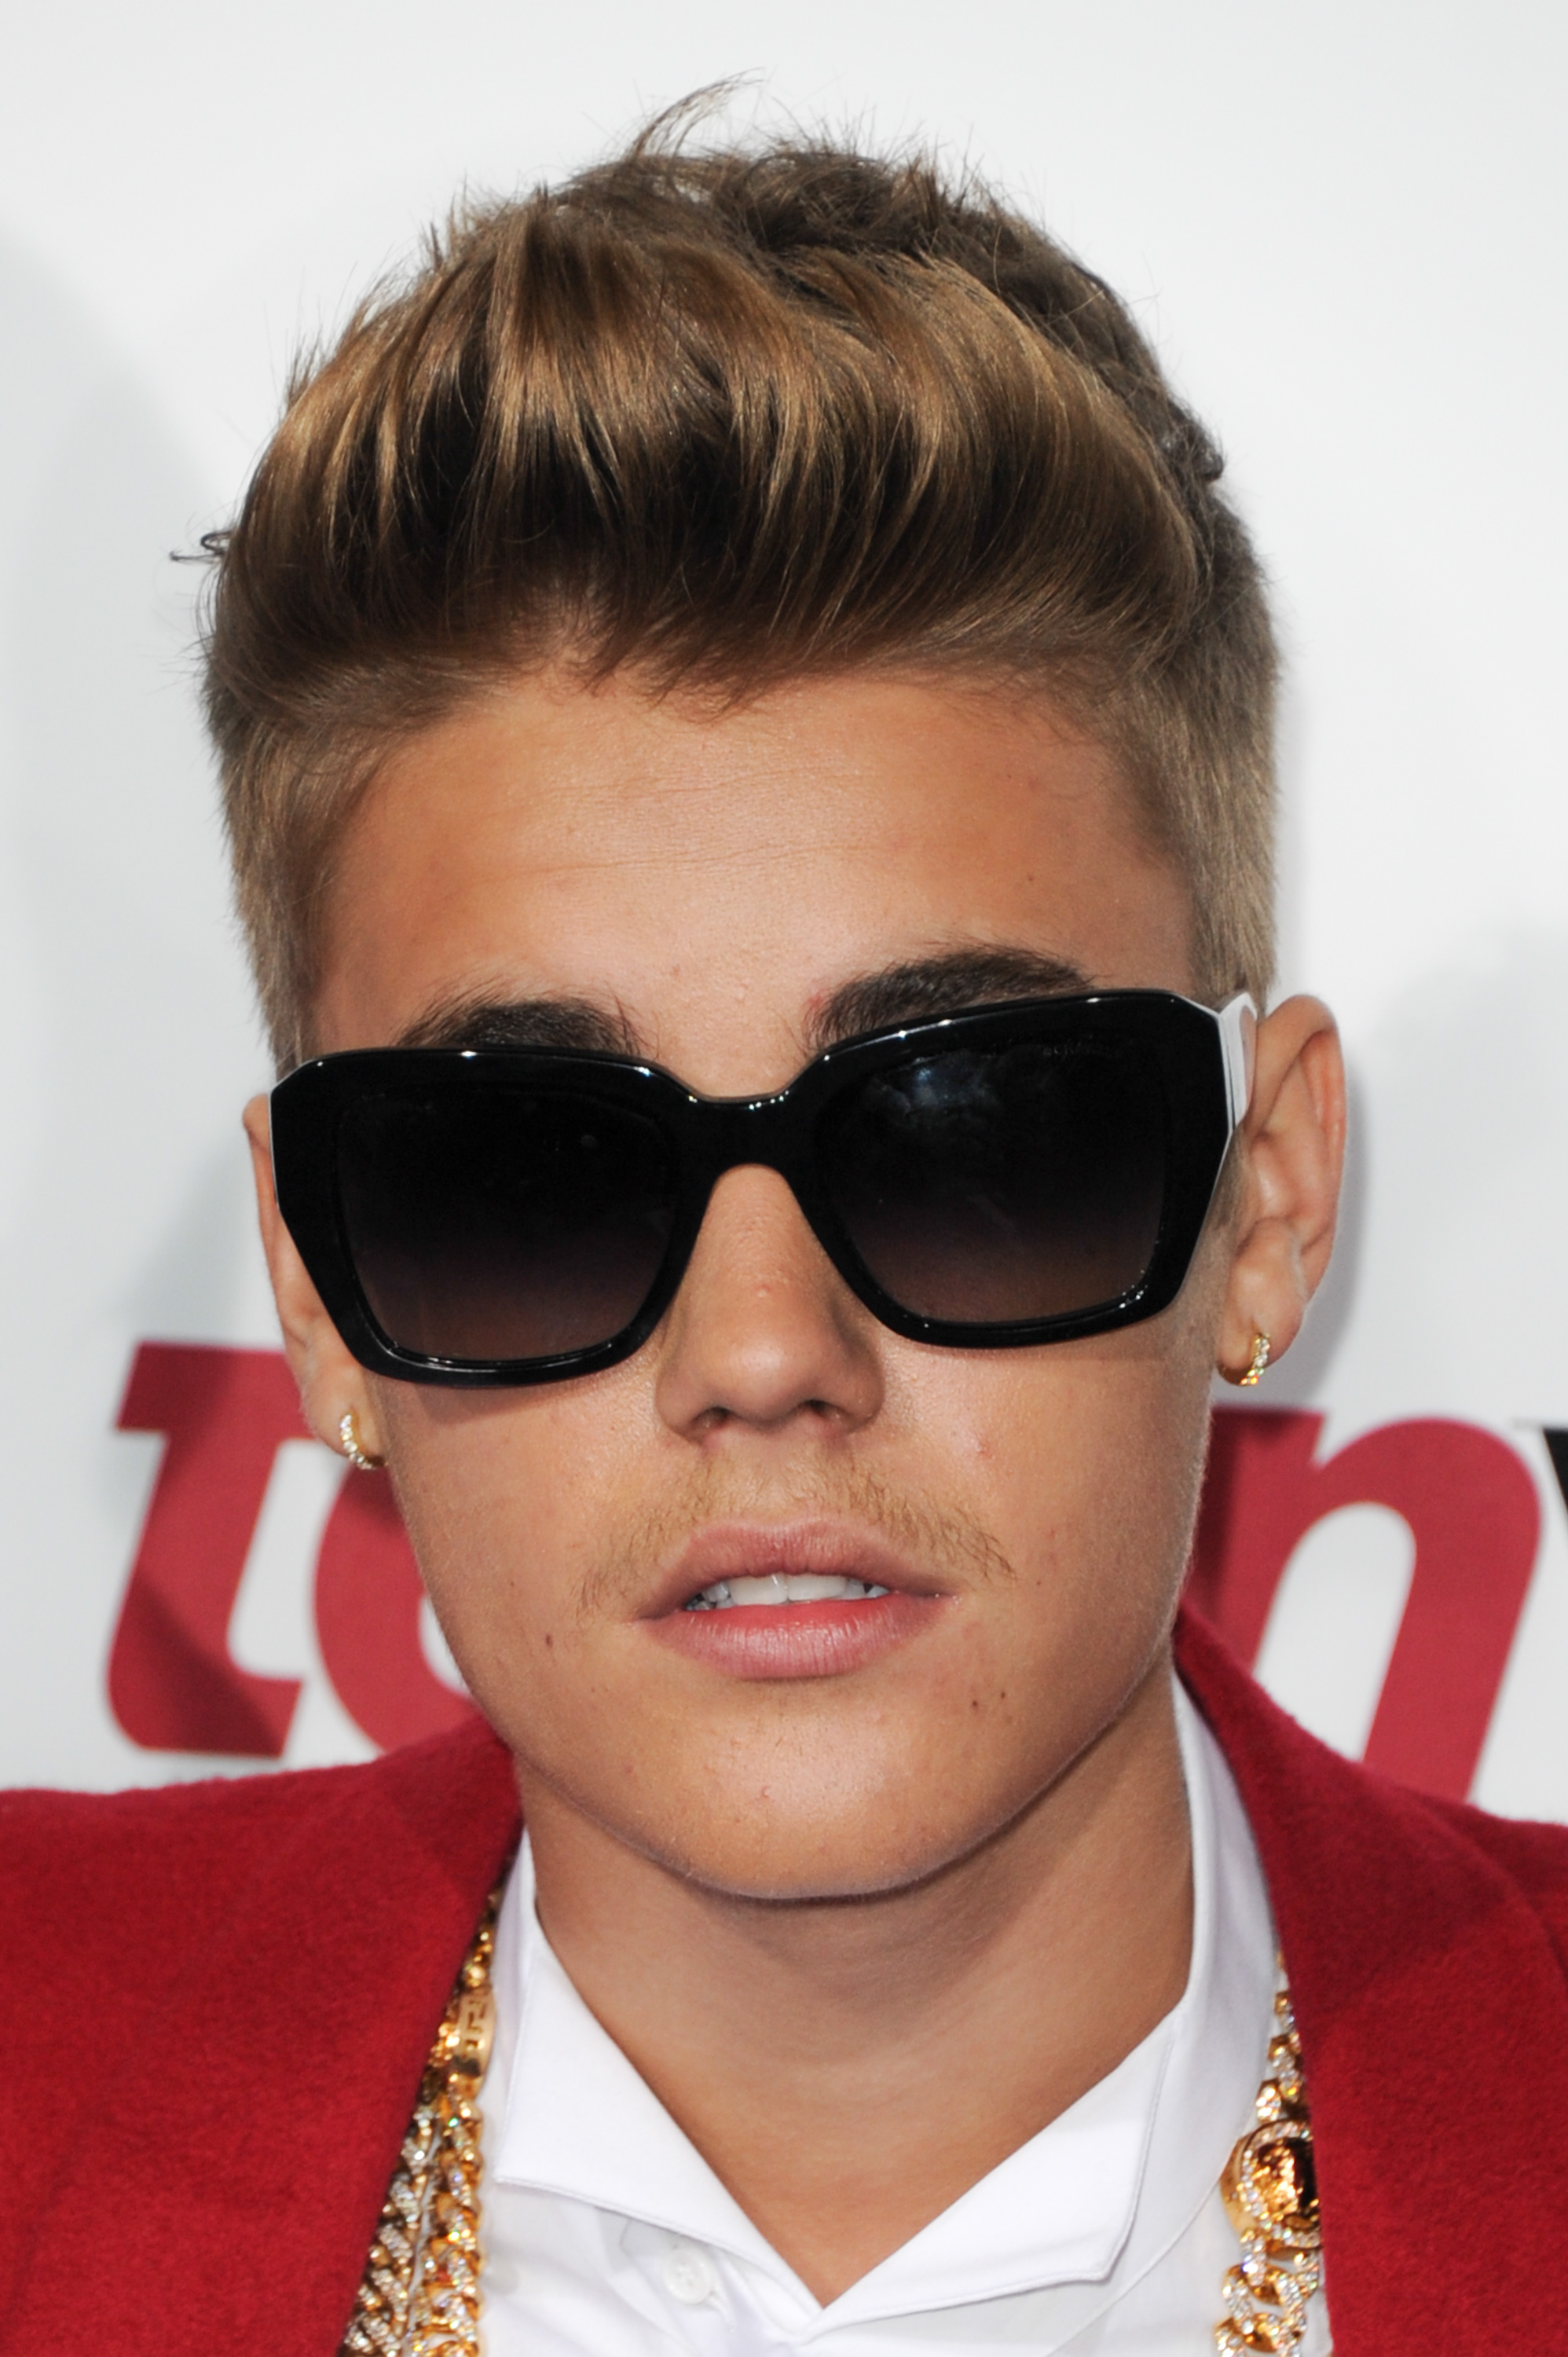 Premiere Of Open Road Films' "Justin Bieber's Believe" - Arrivals